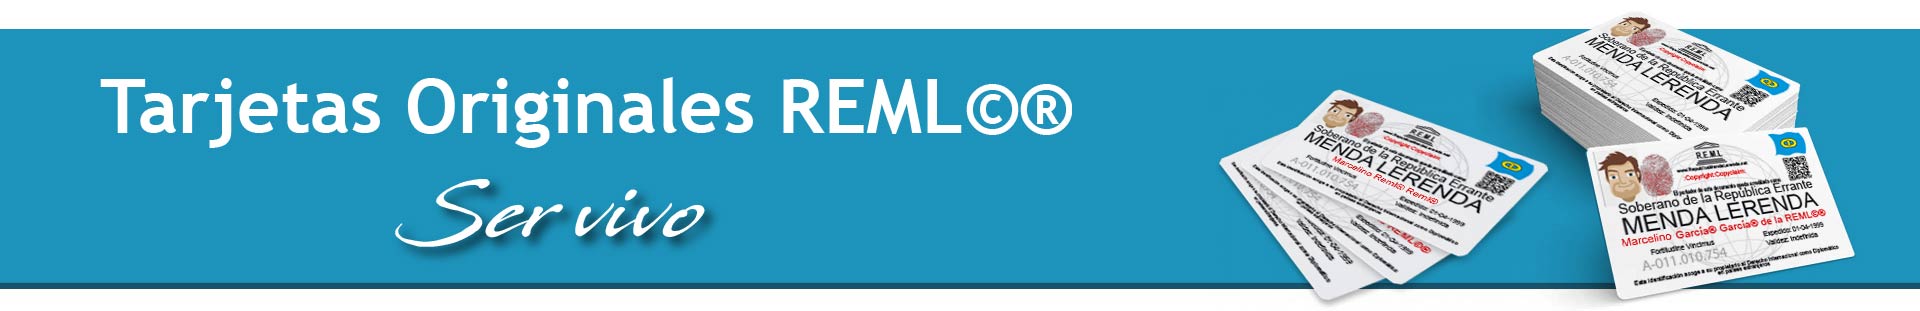 Cabecera tarjetas originales REML modelo ser vivo